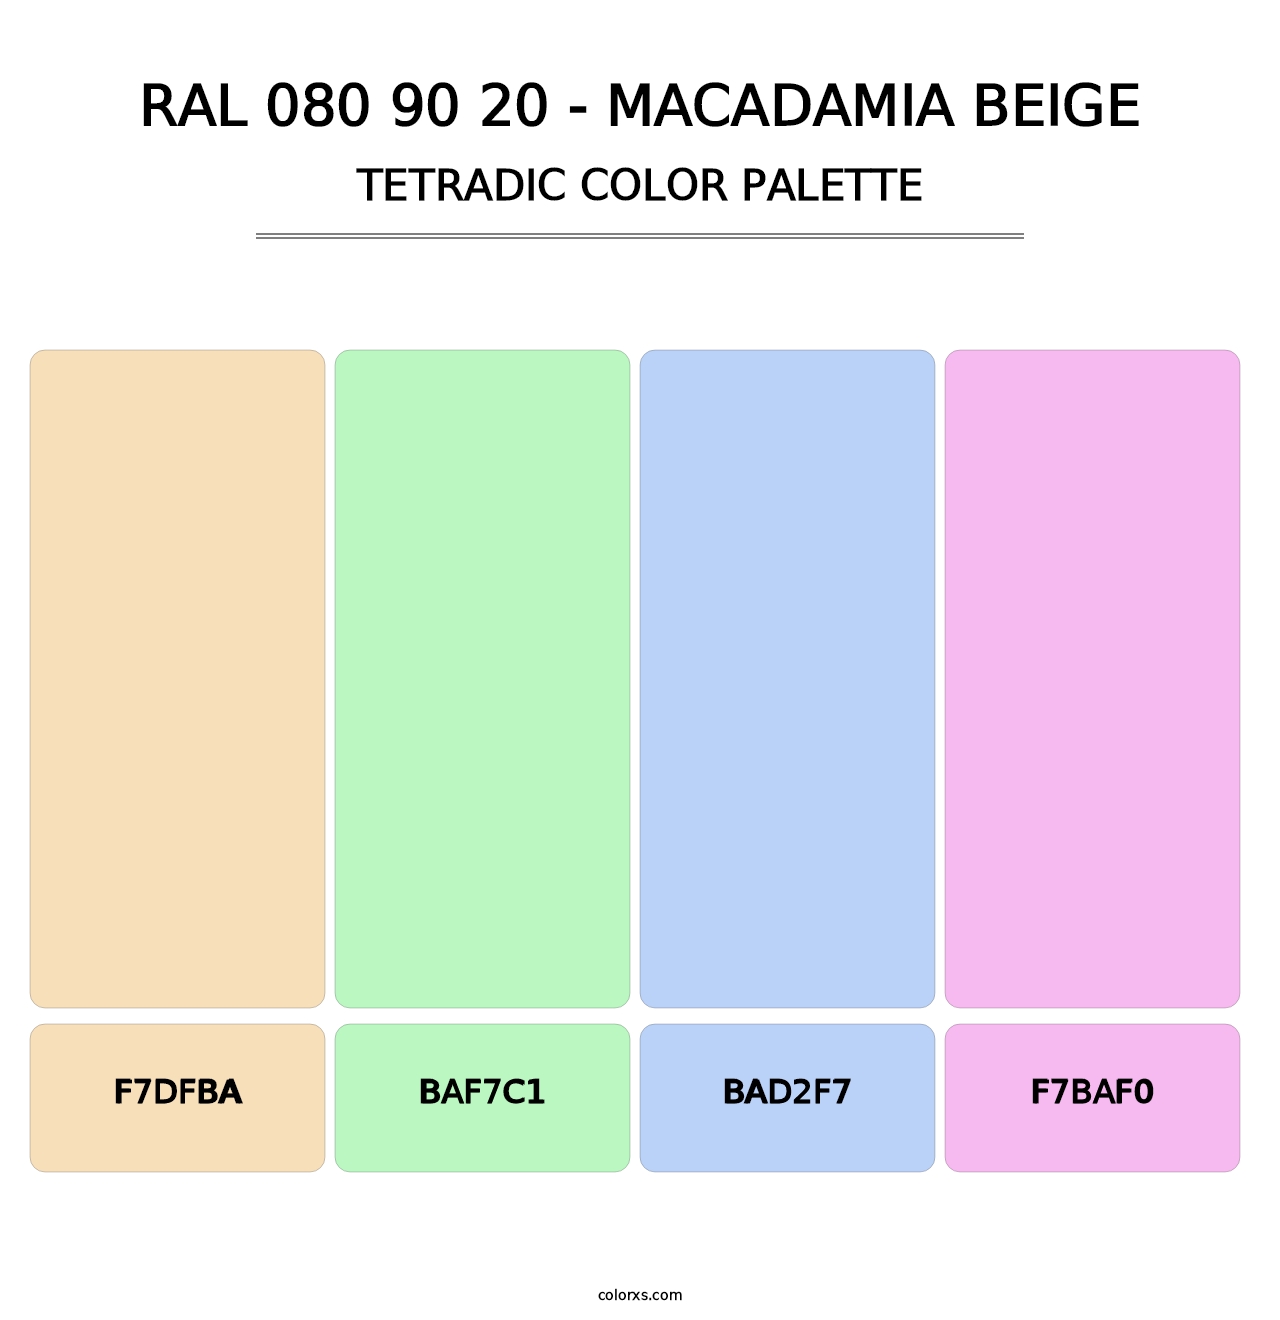 RAL 080 90 20 - Macadamia Beige - Tetradic Color Palette